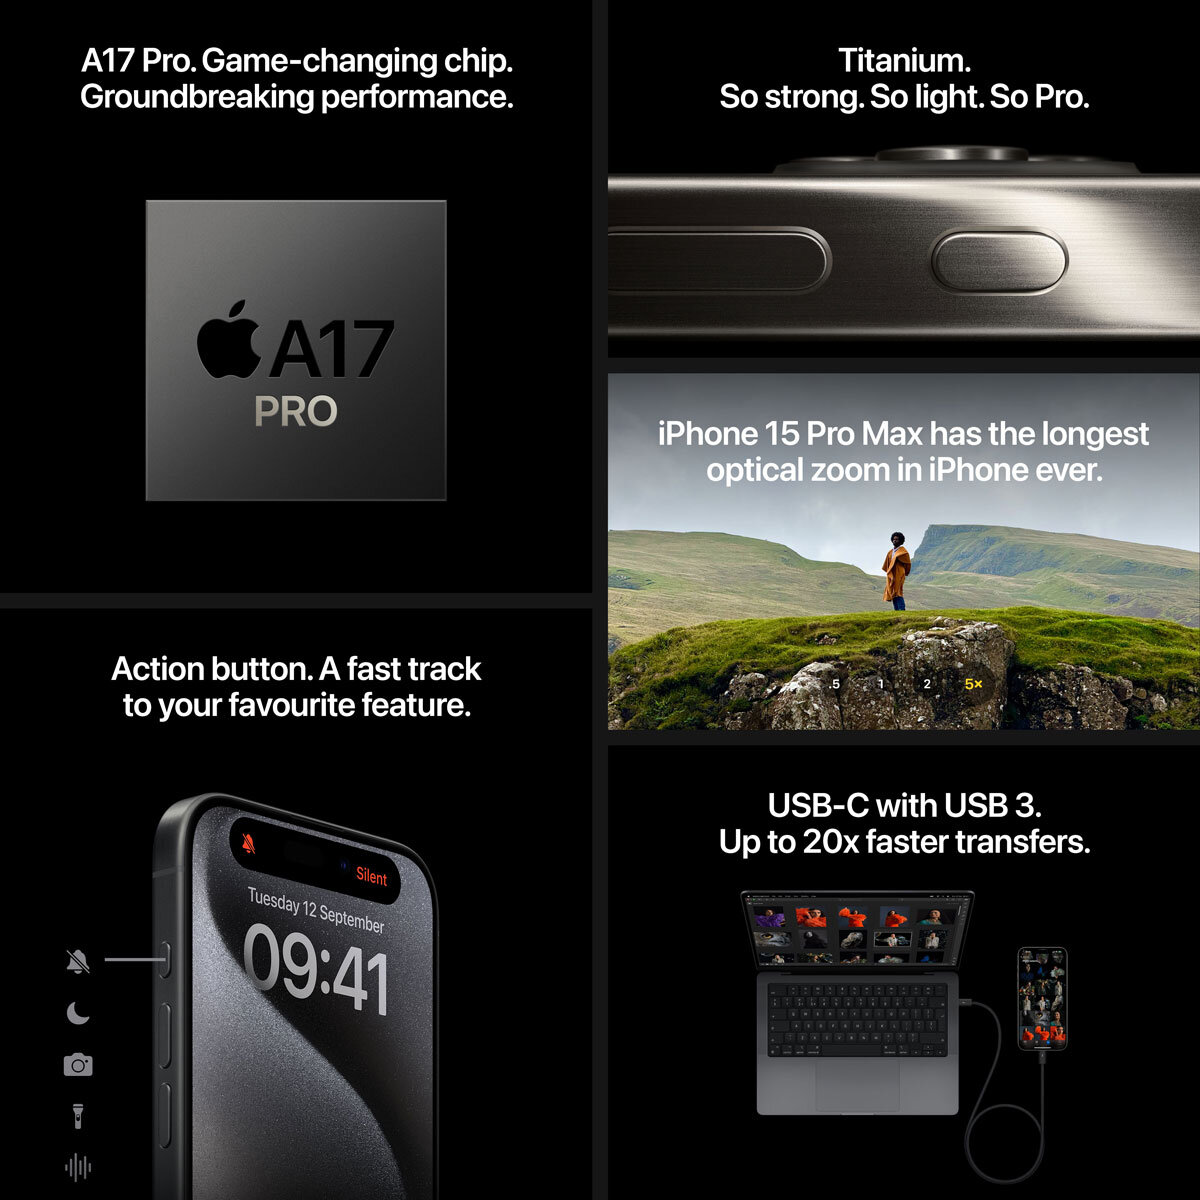 Buy Apple iPhone 15 Pro 512GB Sim Free Mobile Phone in Black Titanium, MTV73ZD/A at Costco.co.uk